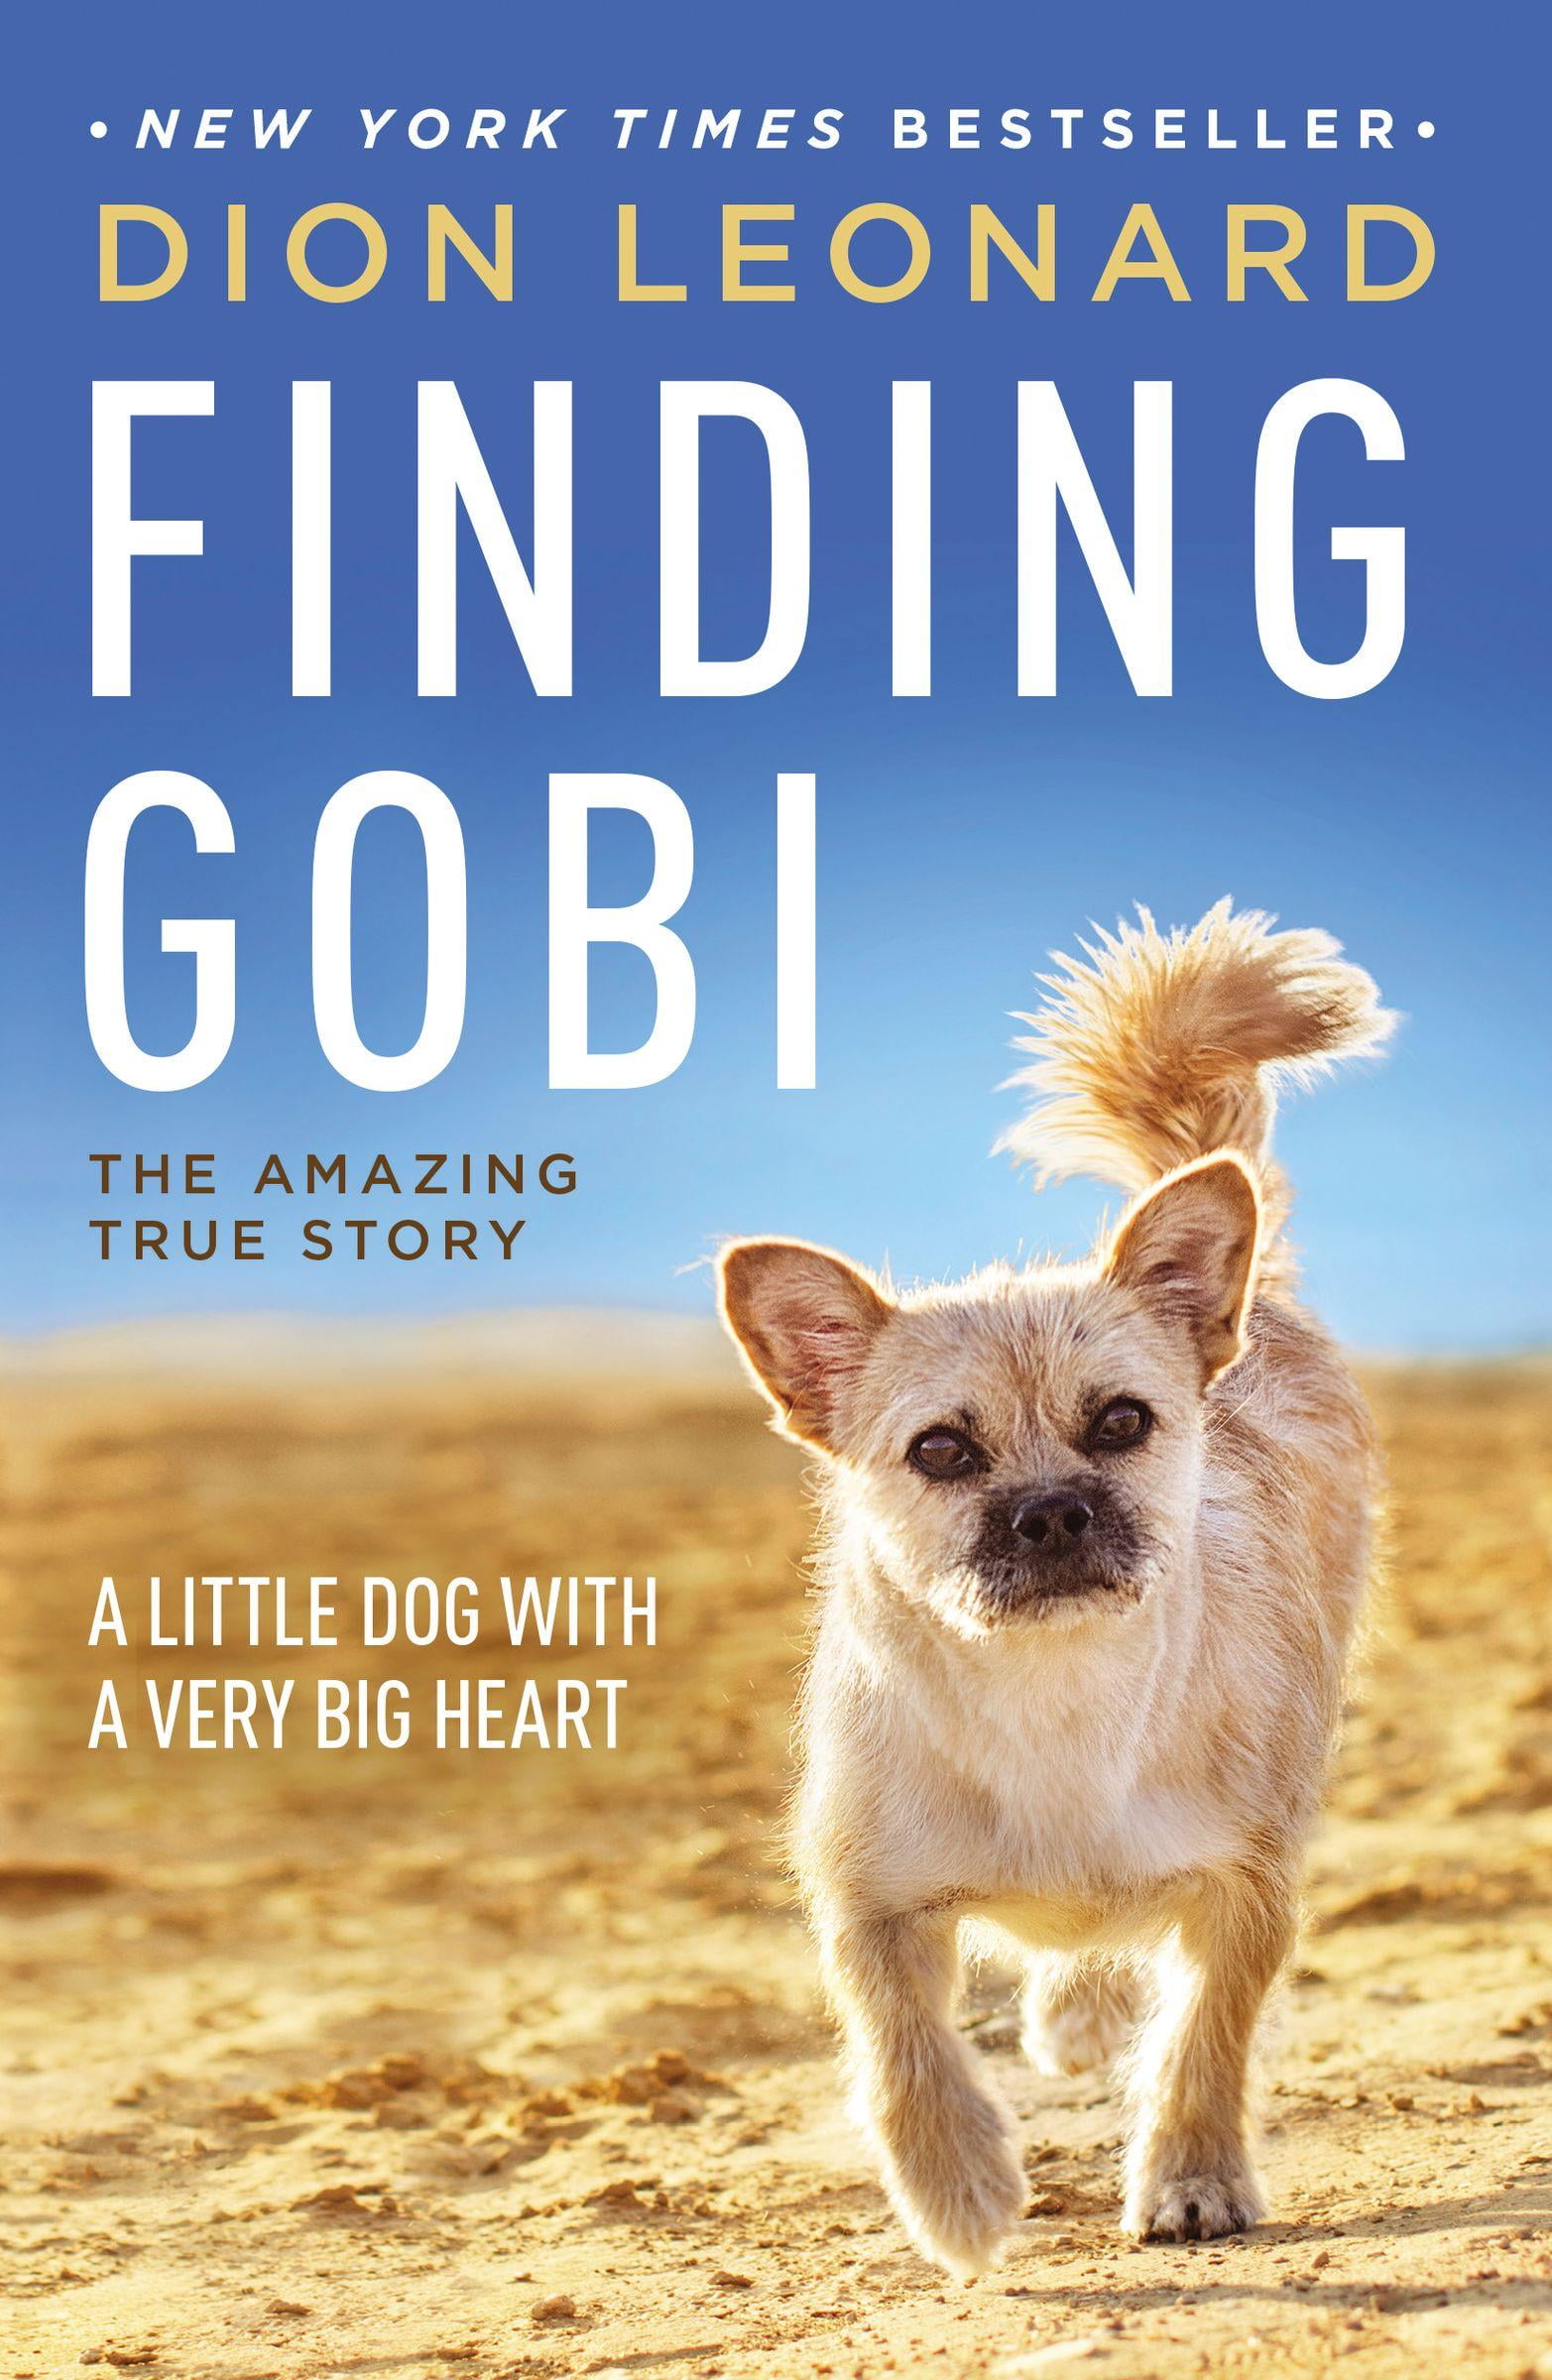 finding gobi book